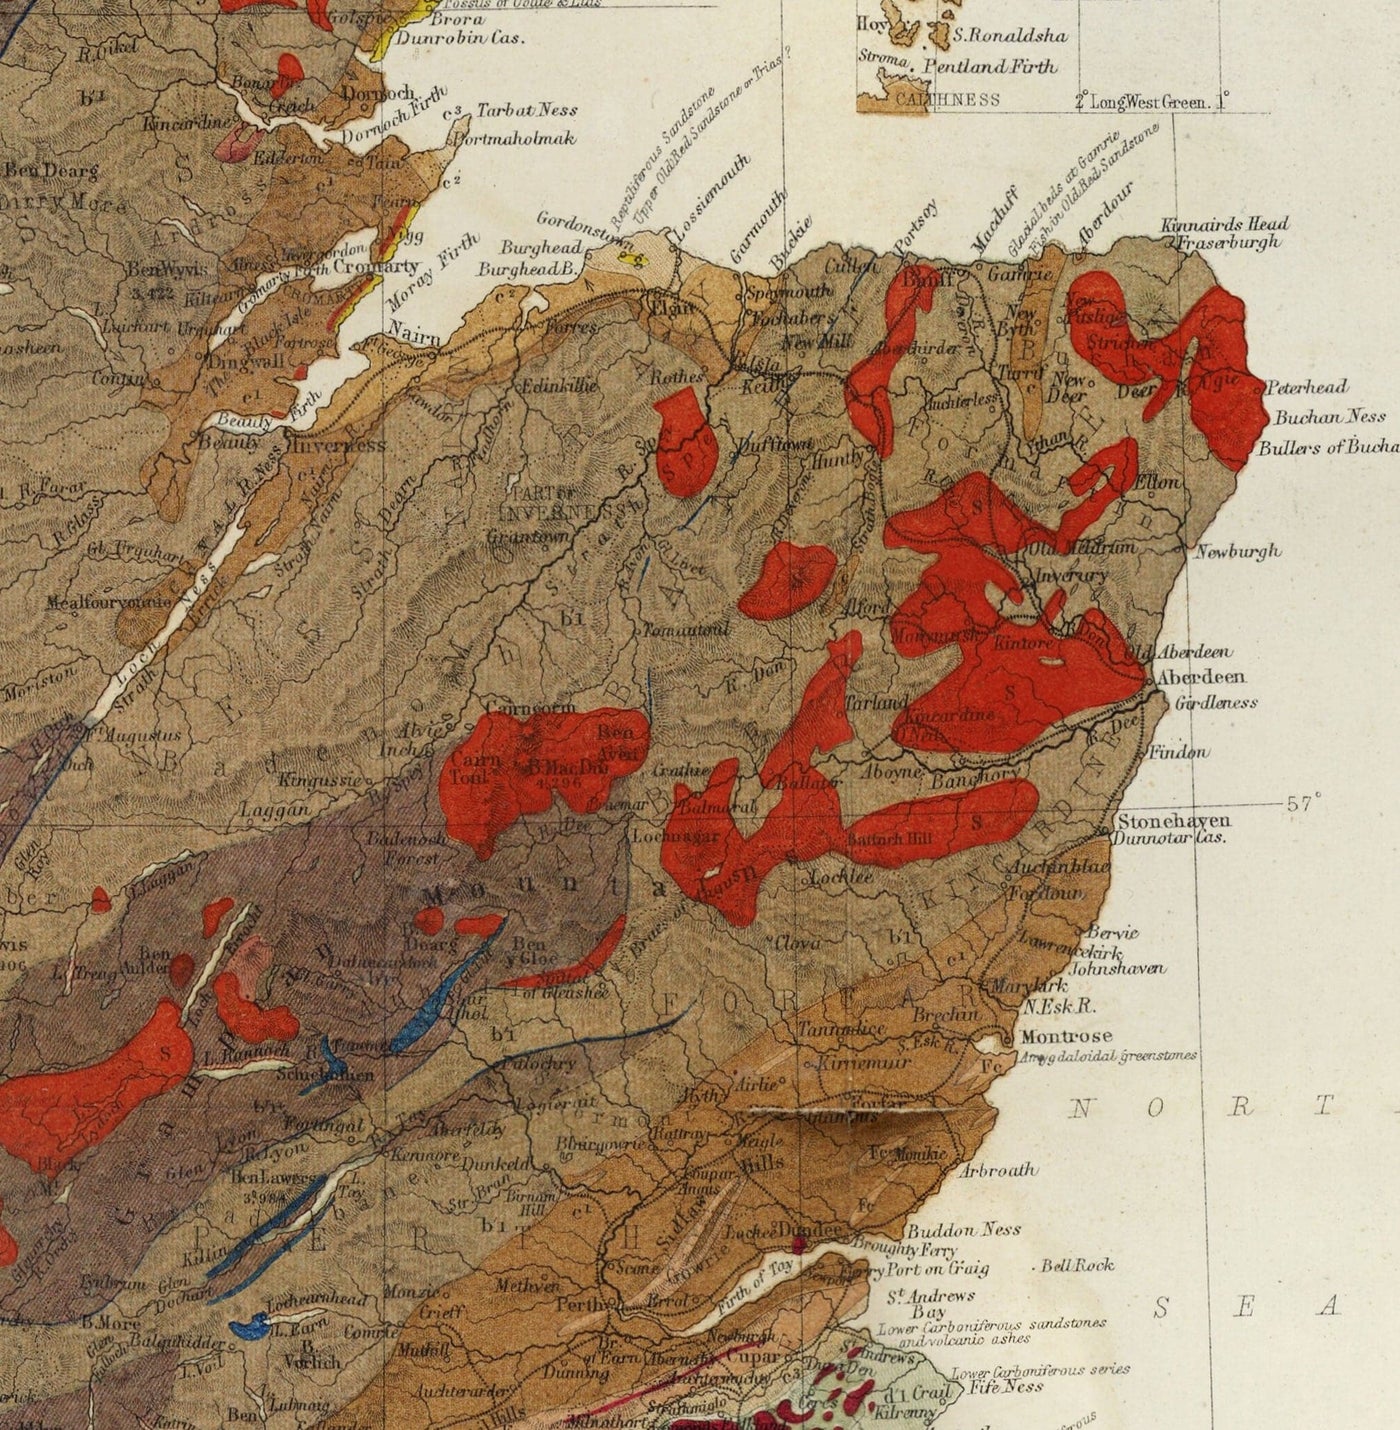 Old Map of Scotland Geology by Roderick I. Murchison 1862 - Skye, Shetland, Orkney, Highlands